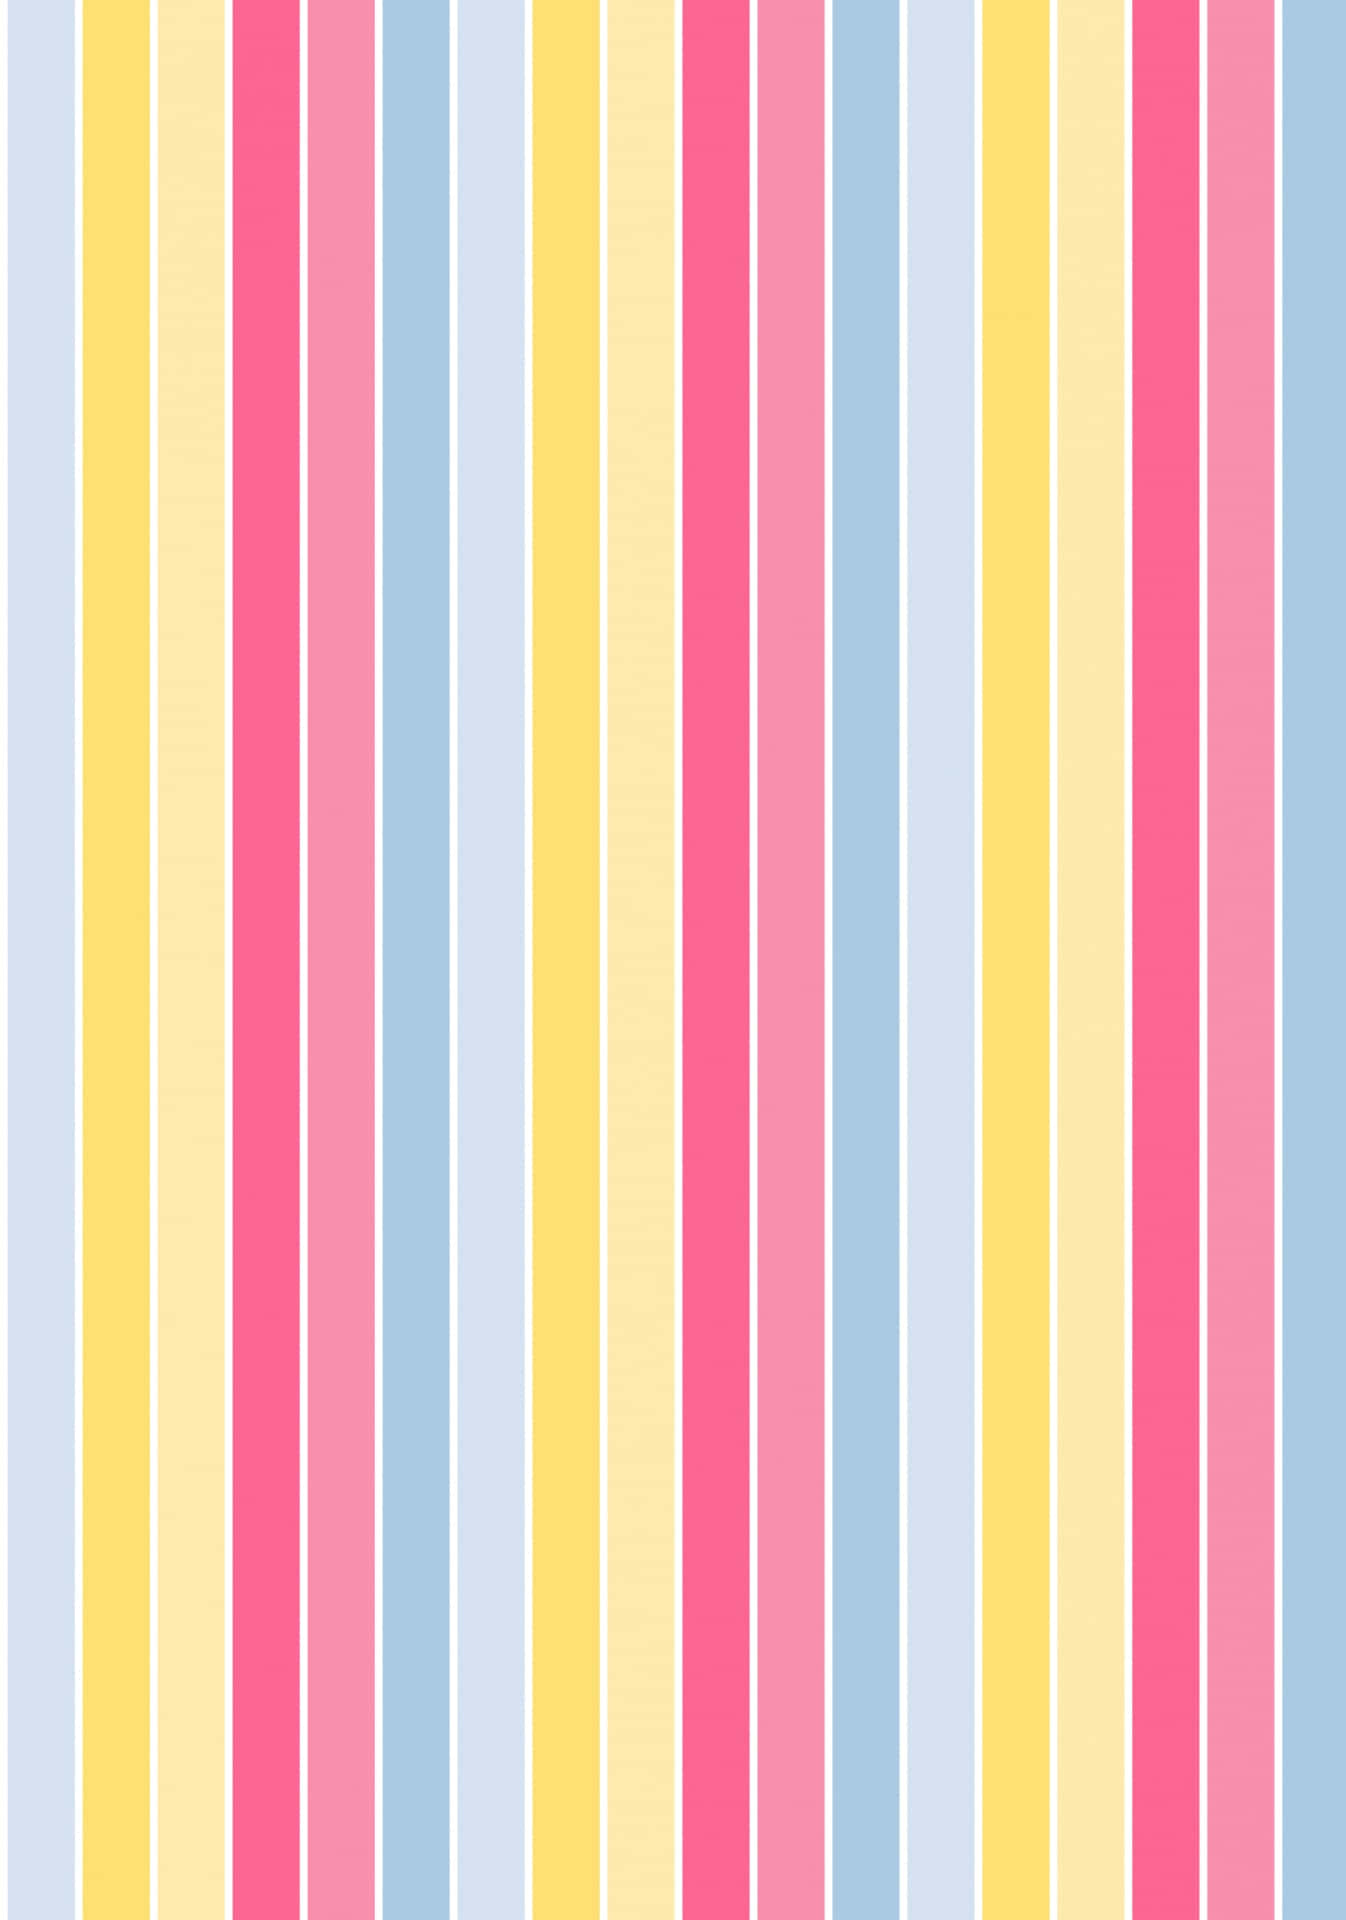 Caption: Elegant Striped Background Pattern